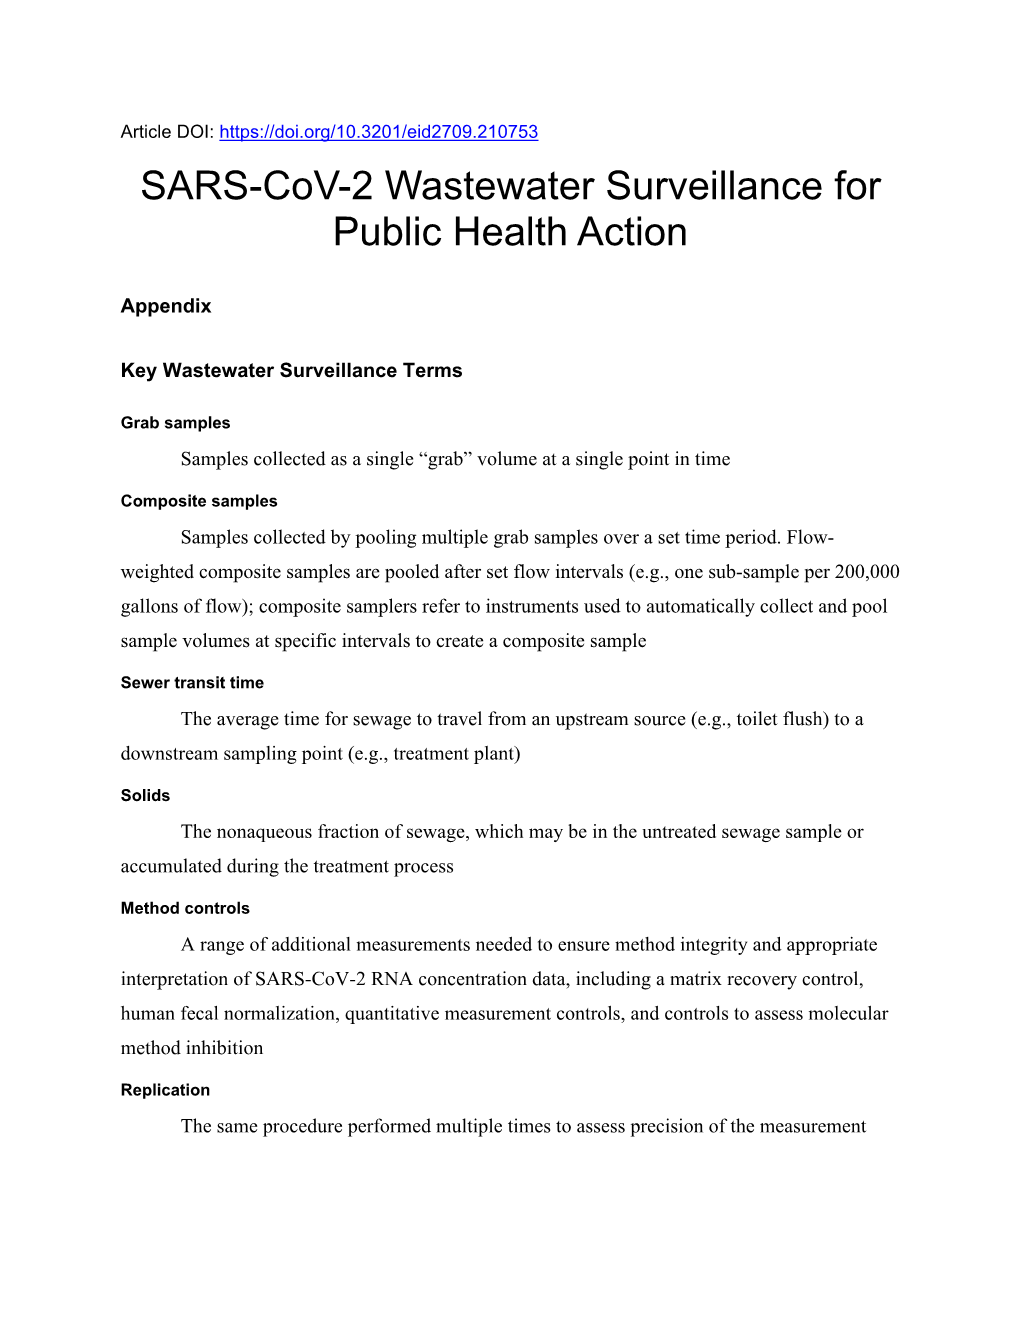 SARS-Cov-2 Wastewater Surveillance for Public Health Action